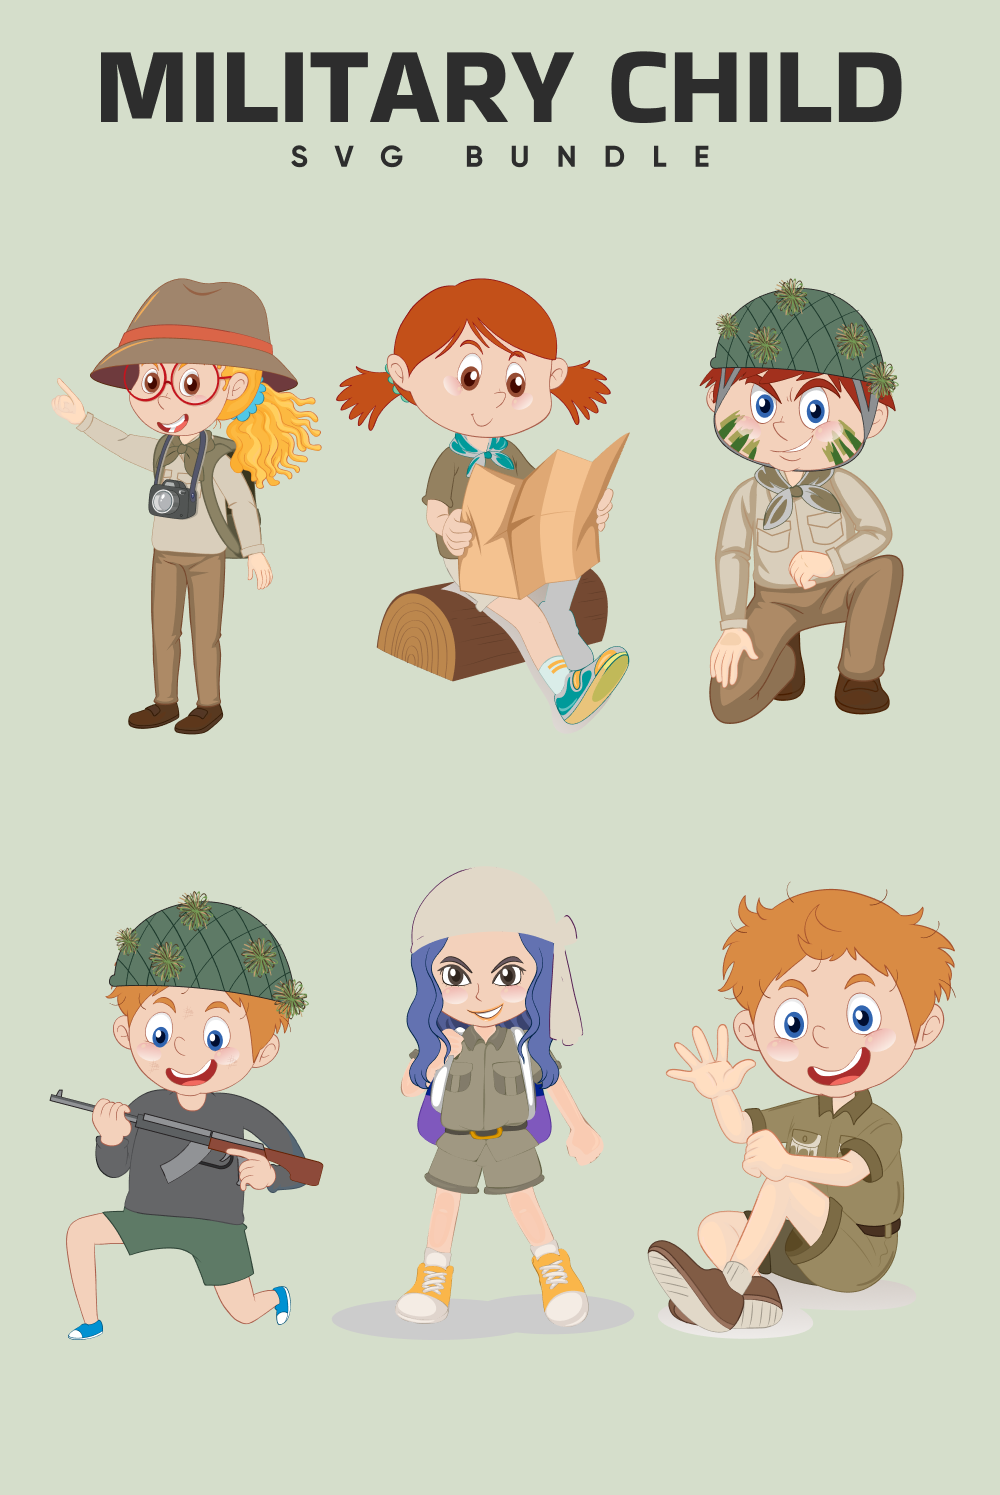 Children in a military uniform.